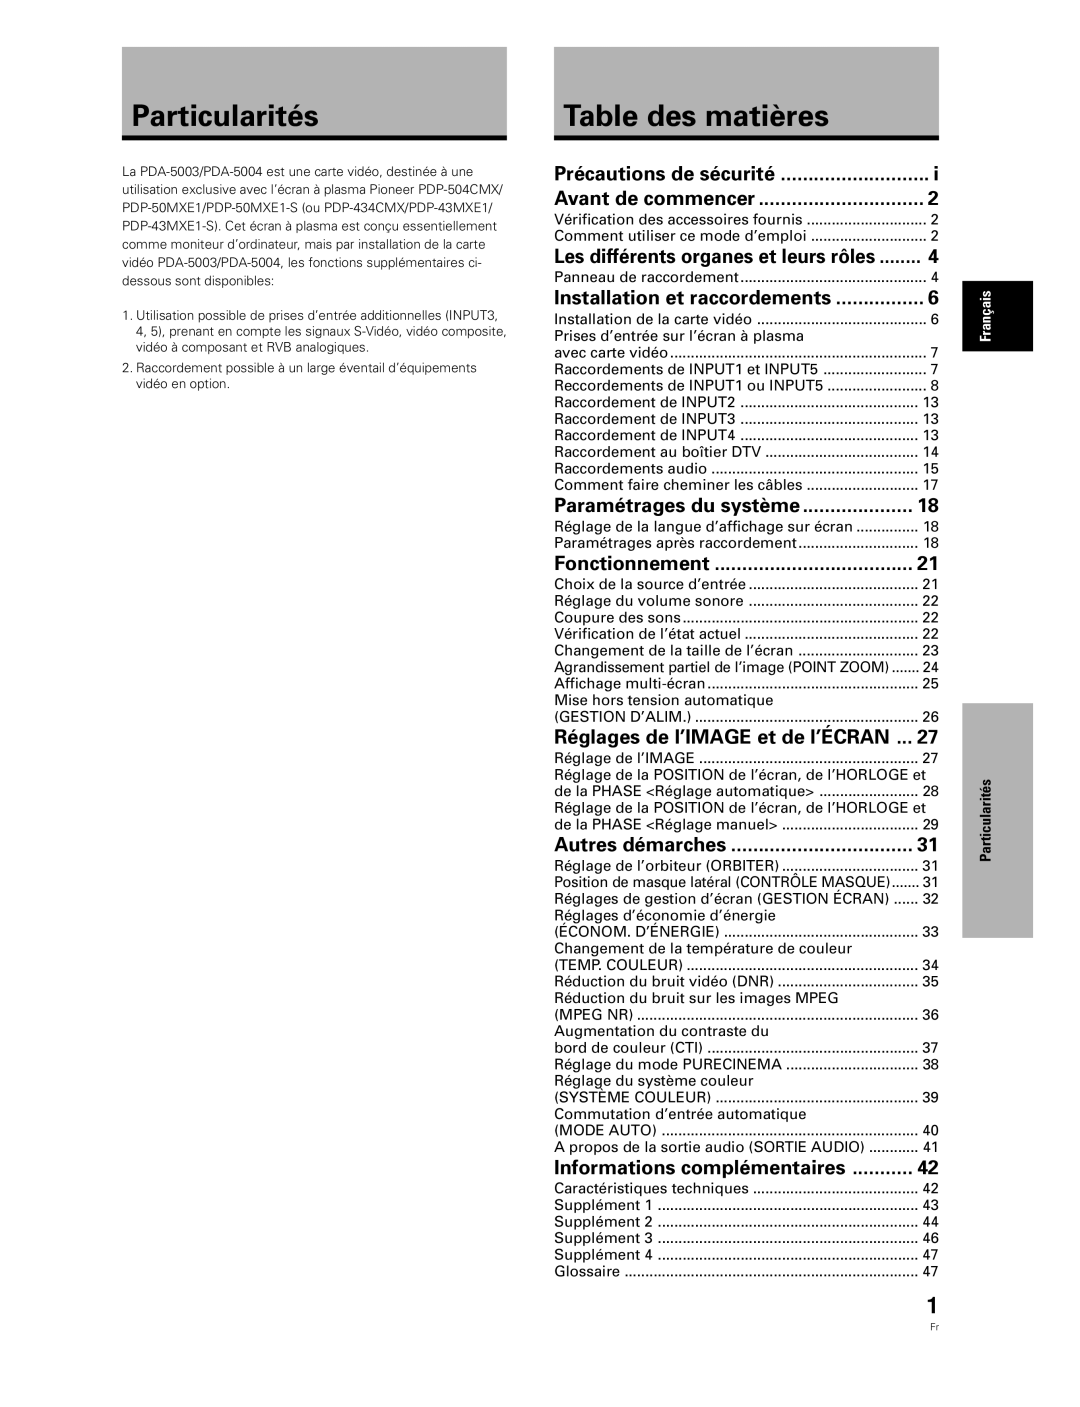 Pioneer PDA-5003, PDA-5004 manual Particularités, Table des matières, Les différents organes et leurs rôles 